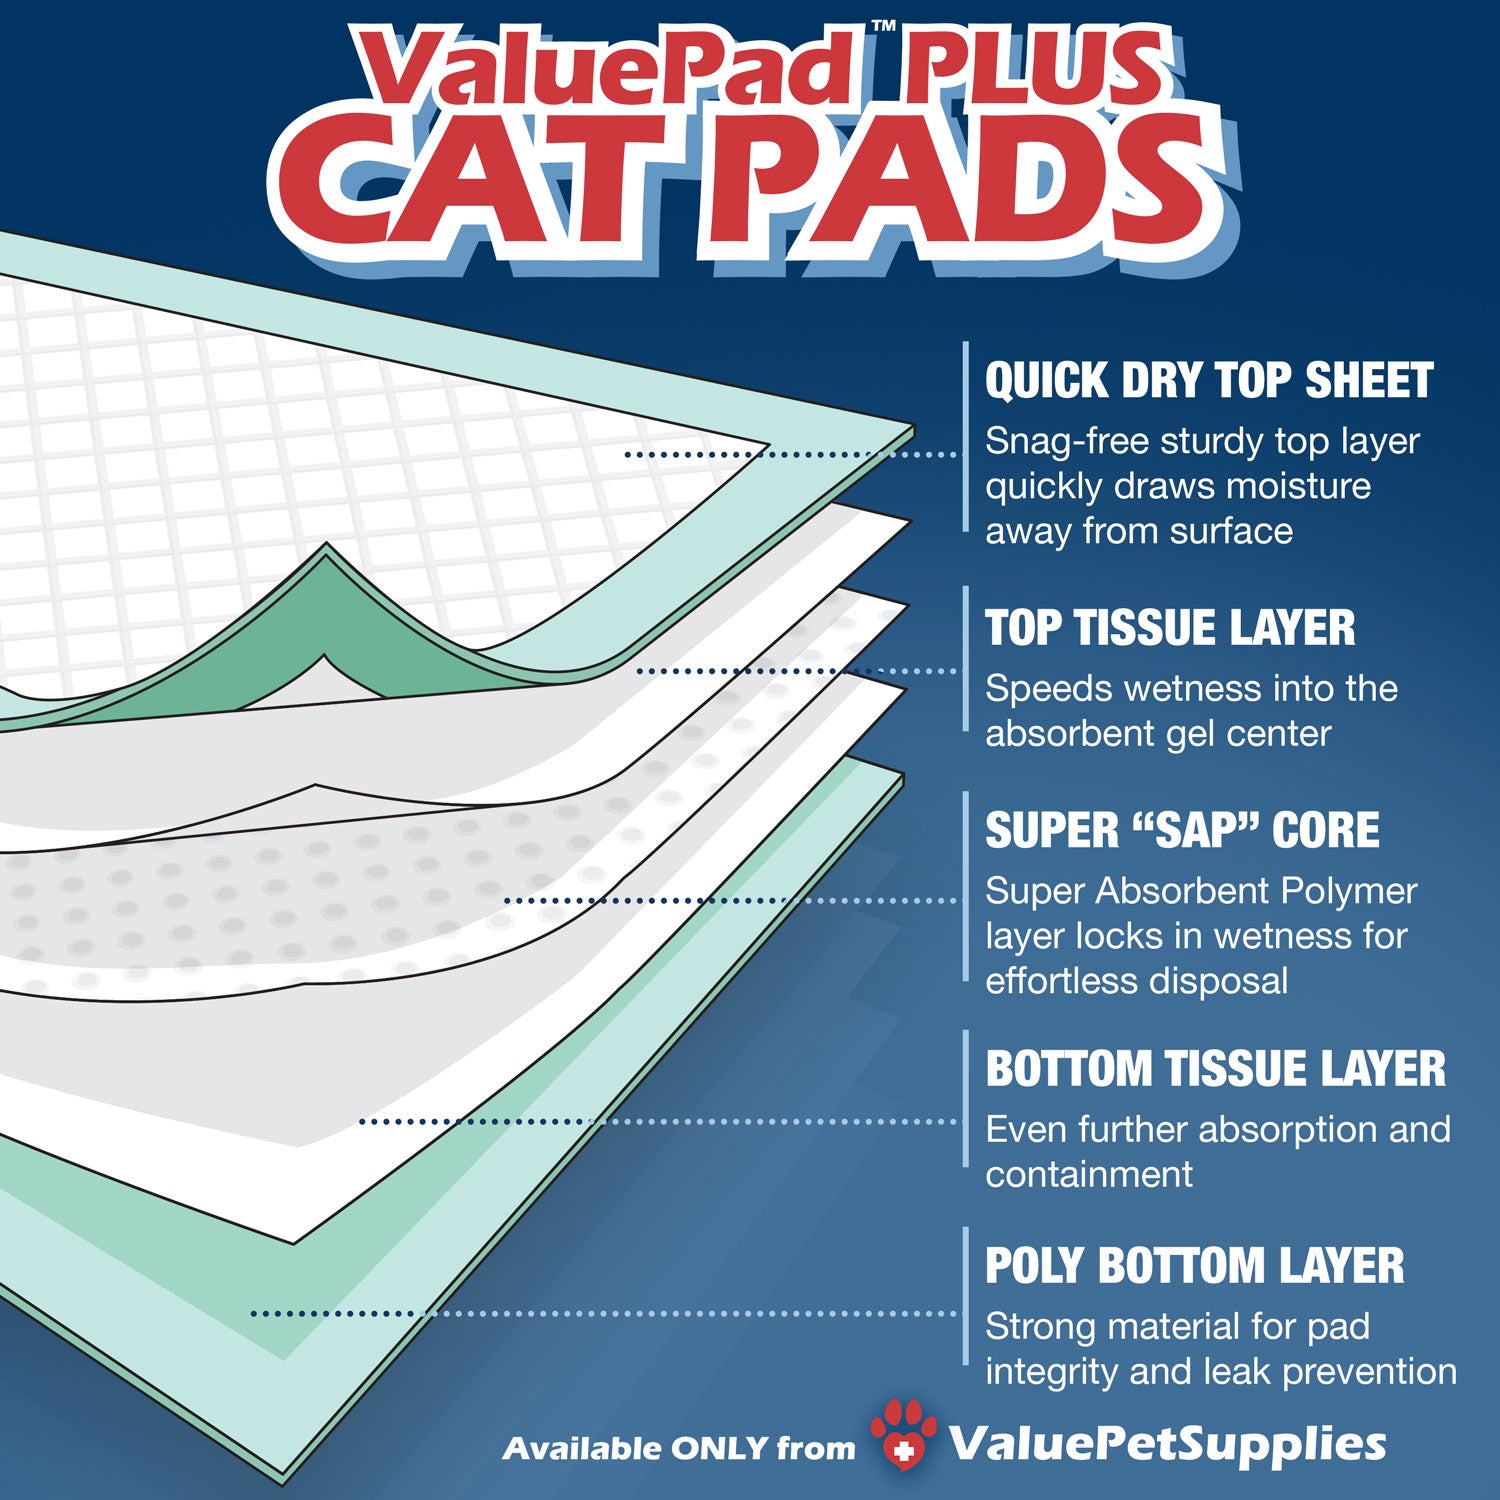 ValuePad Plus Cat Litter Pads, 16.9x11.4 Inch, Unscented, 400 Count - Breeze Compatible Refills WHOLESALE PACK